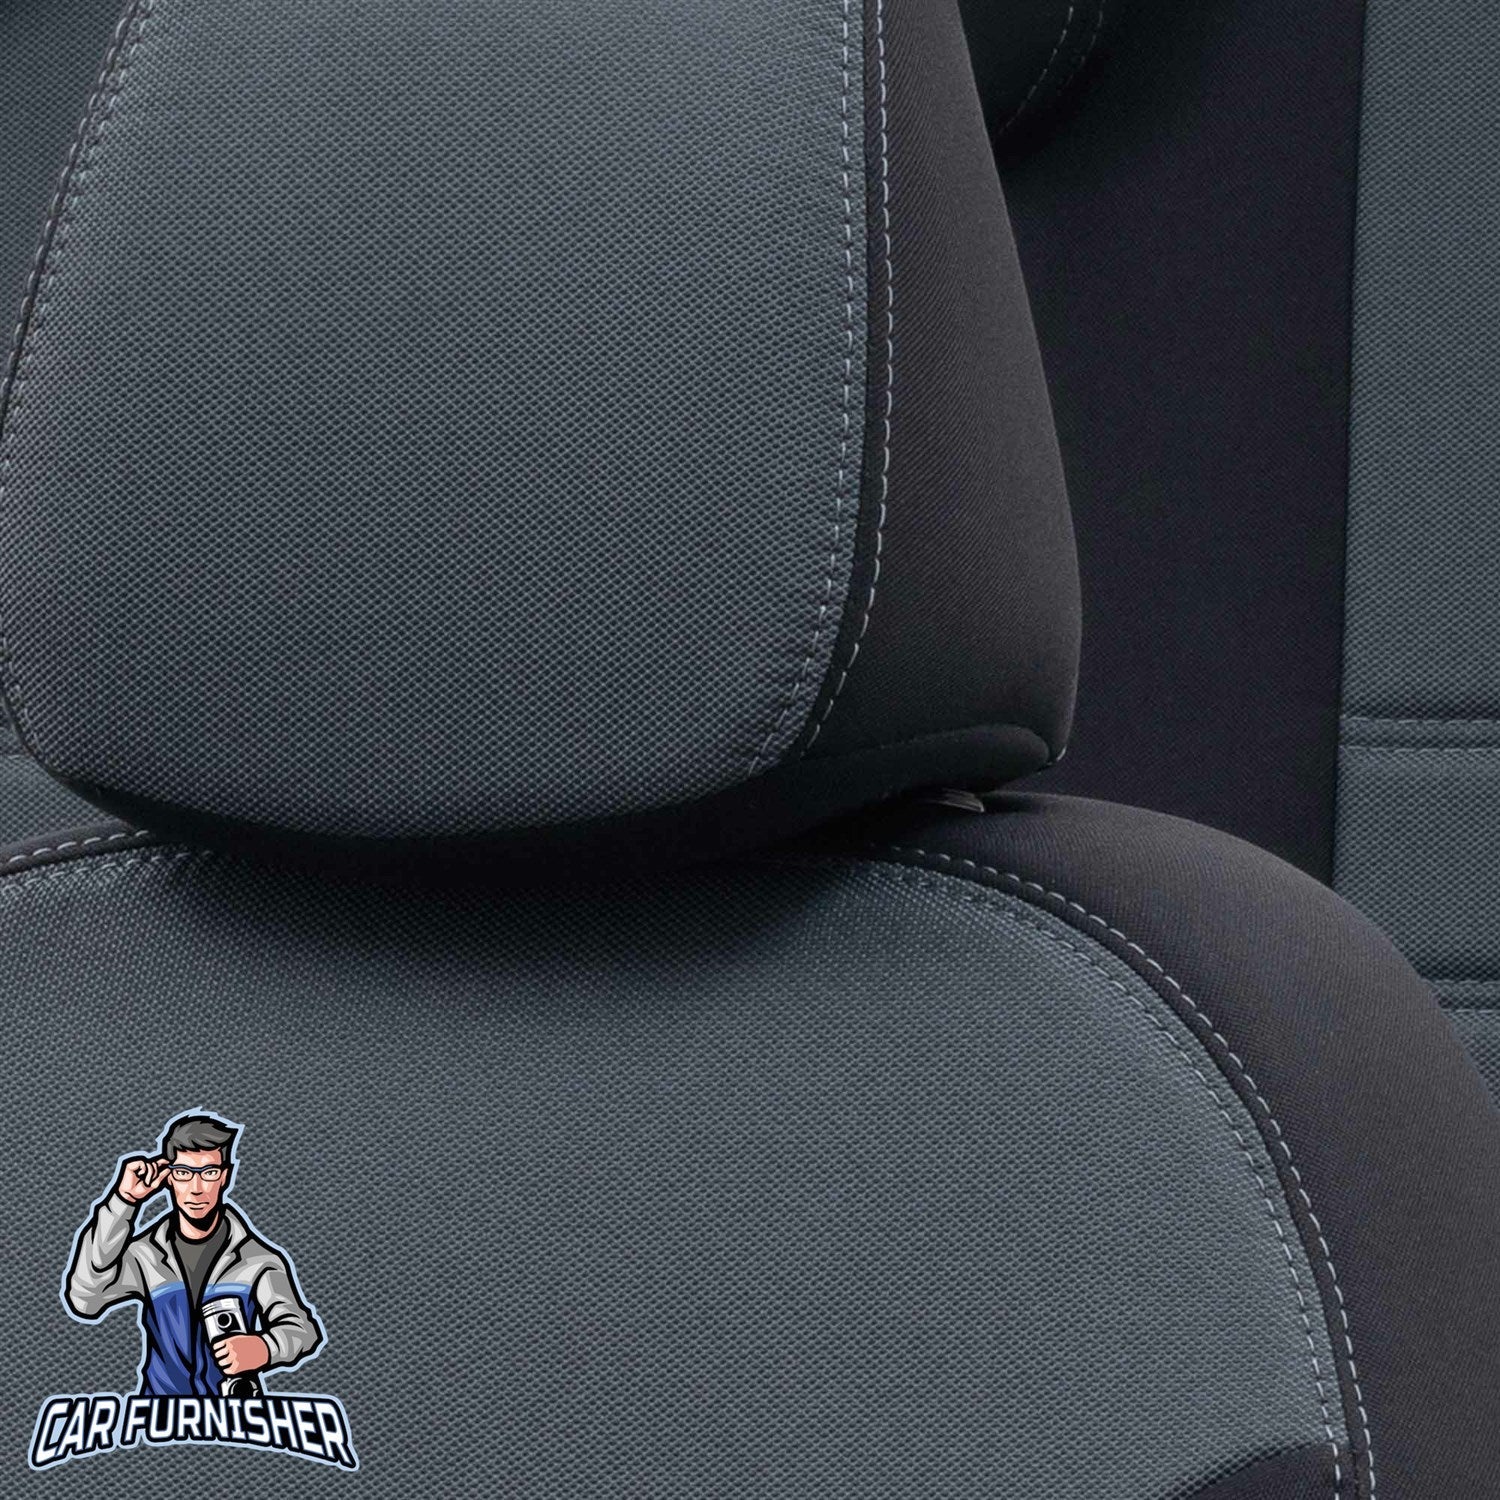 Mazda 626 Seat Cover Original Jacquard Design Smoked Black Jacquard Fabric